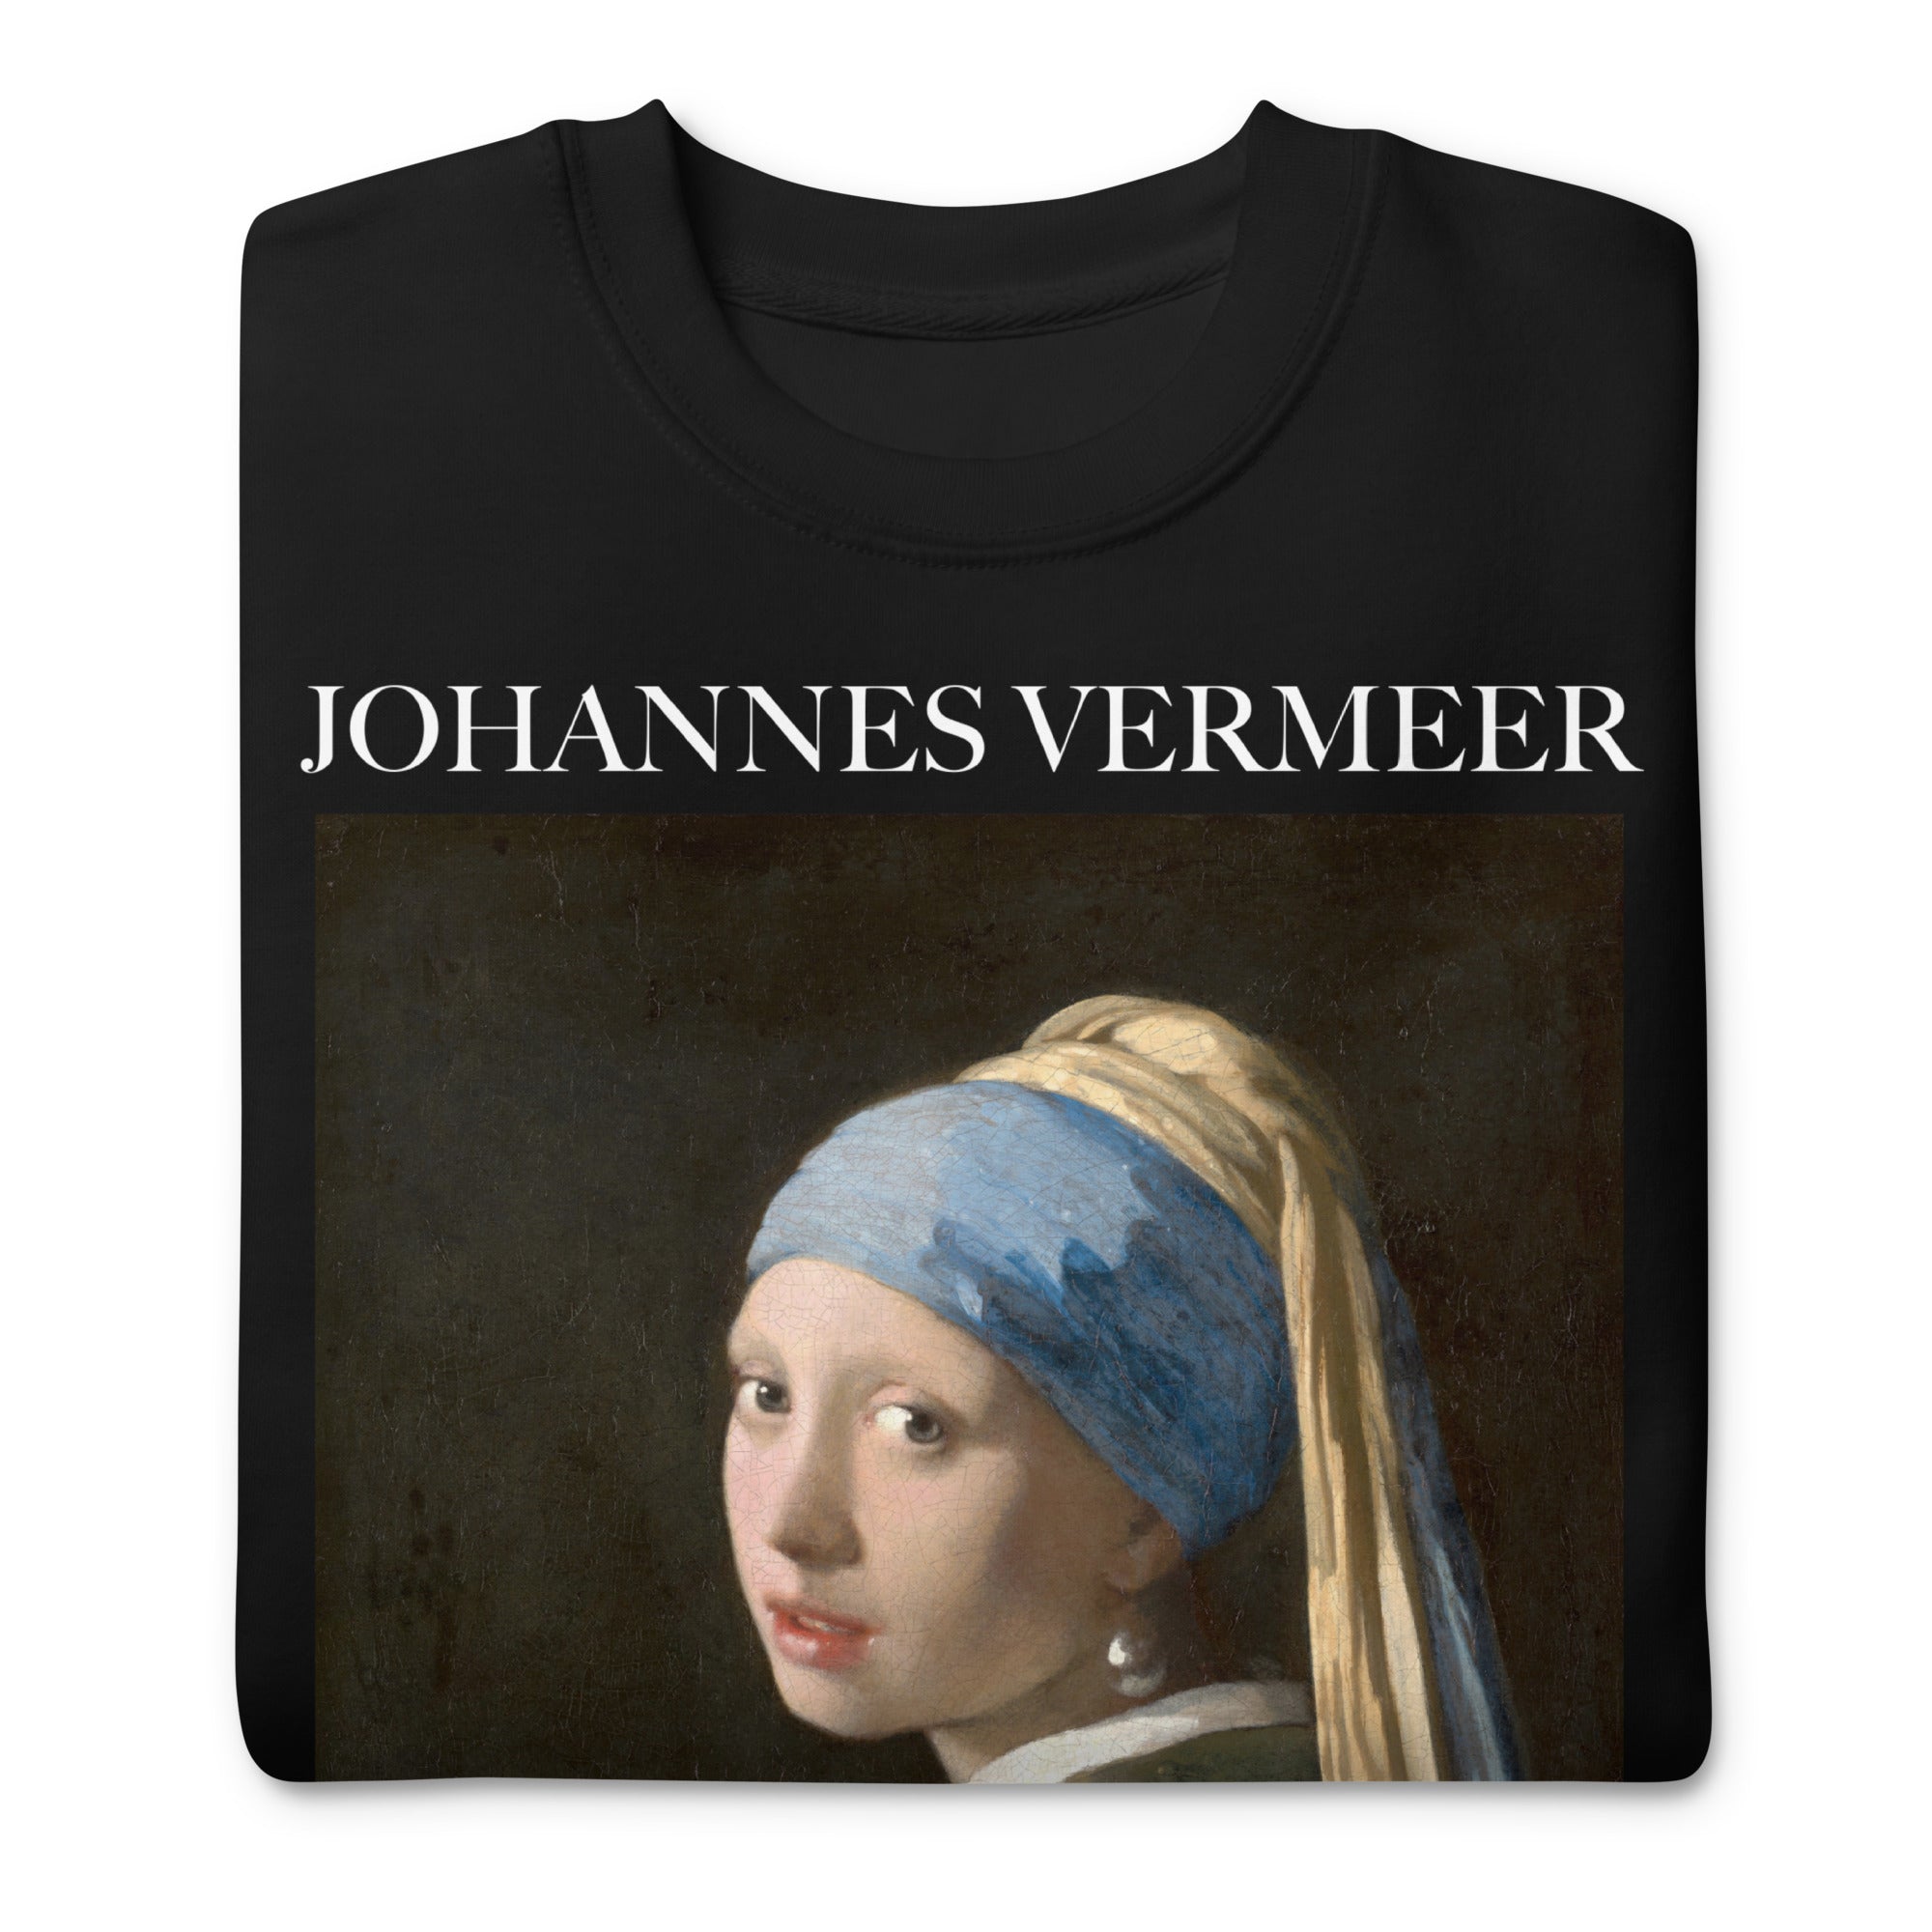 Johannes Vermeer 'Girl with a Pearl Earring' Famous Painting Sweatshirt | Unisex Premium Sweatshirt